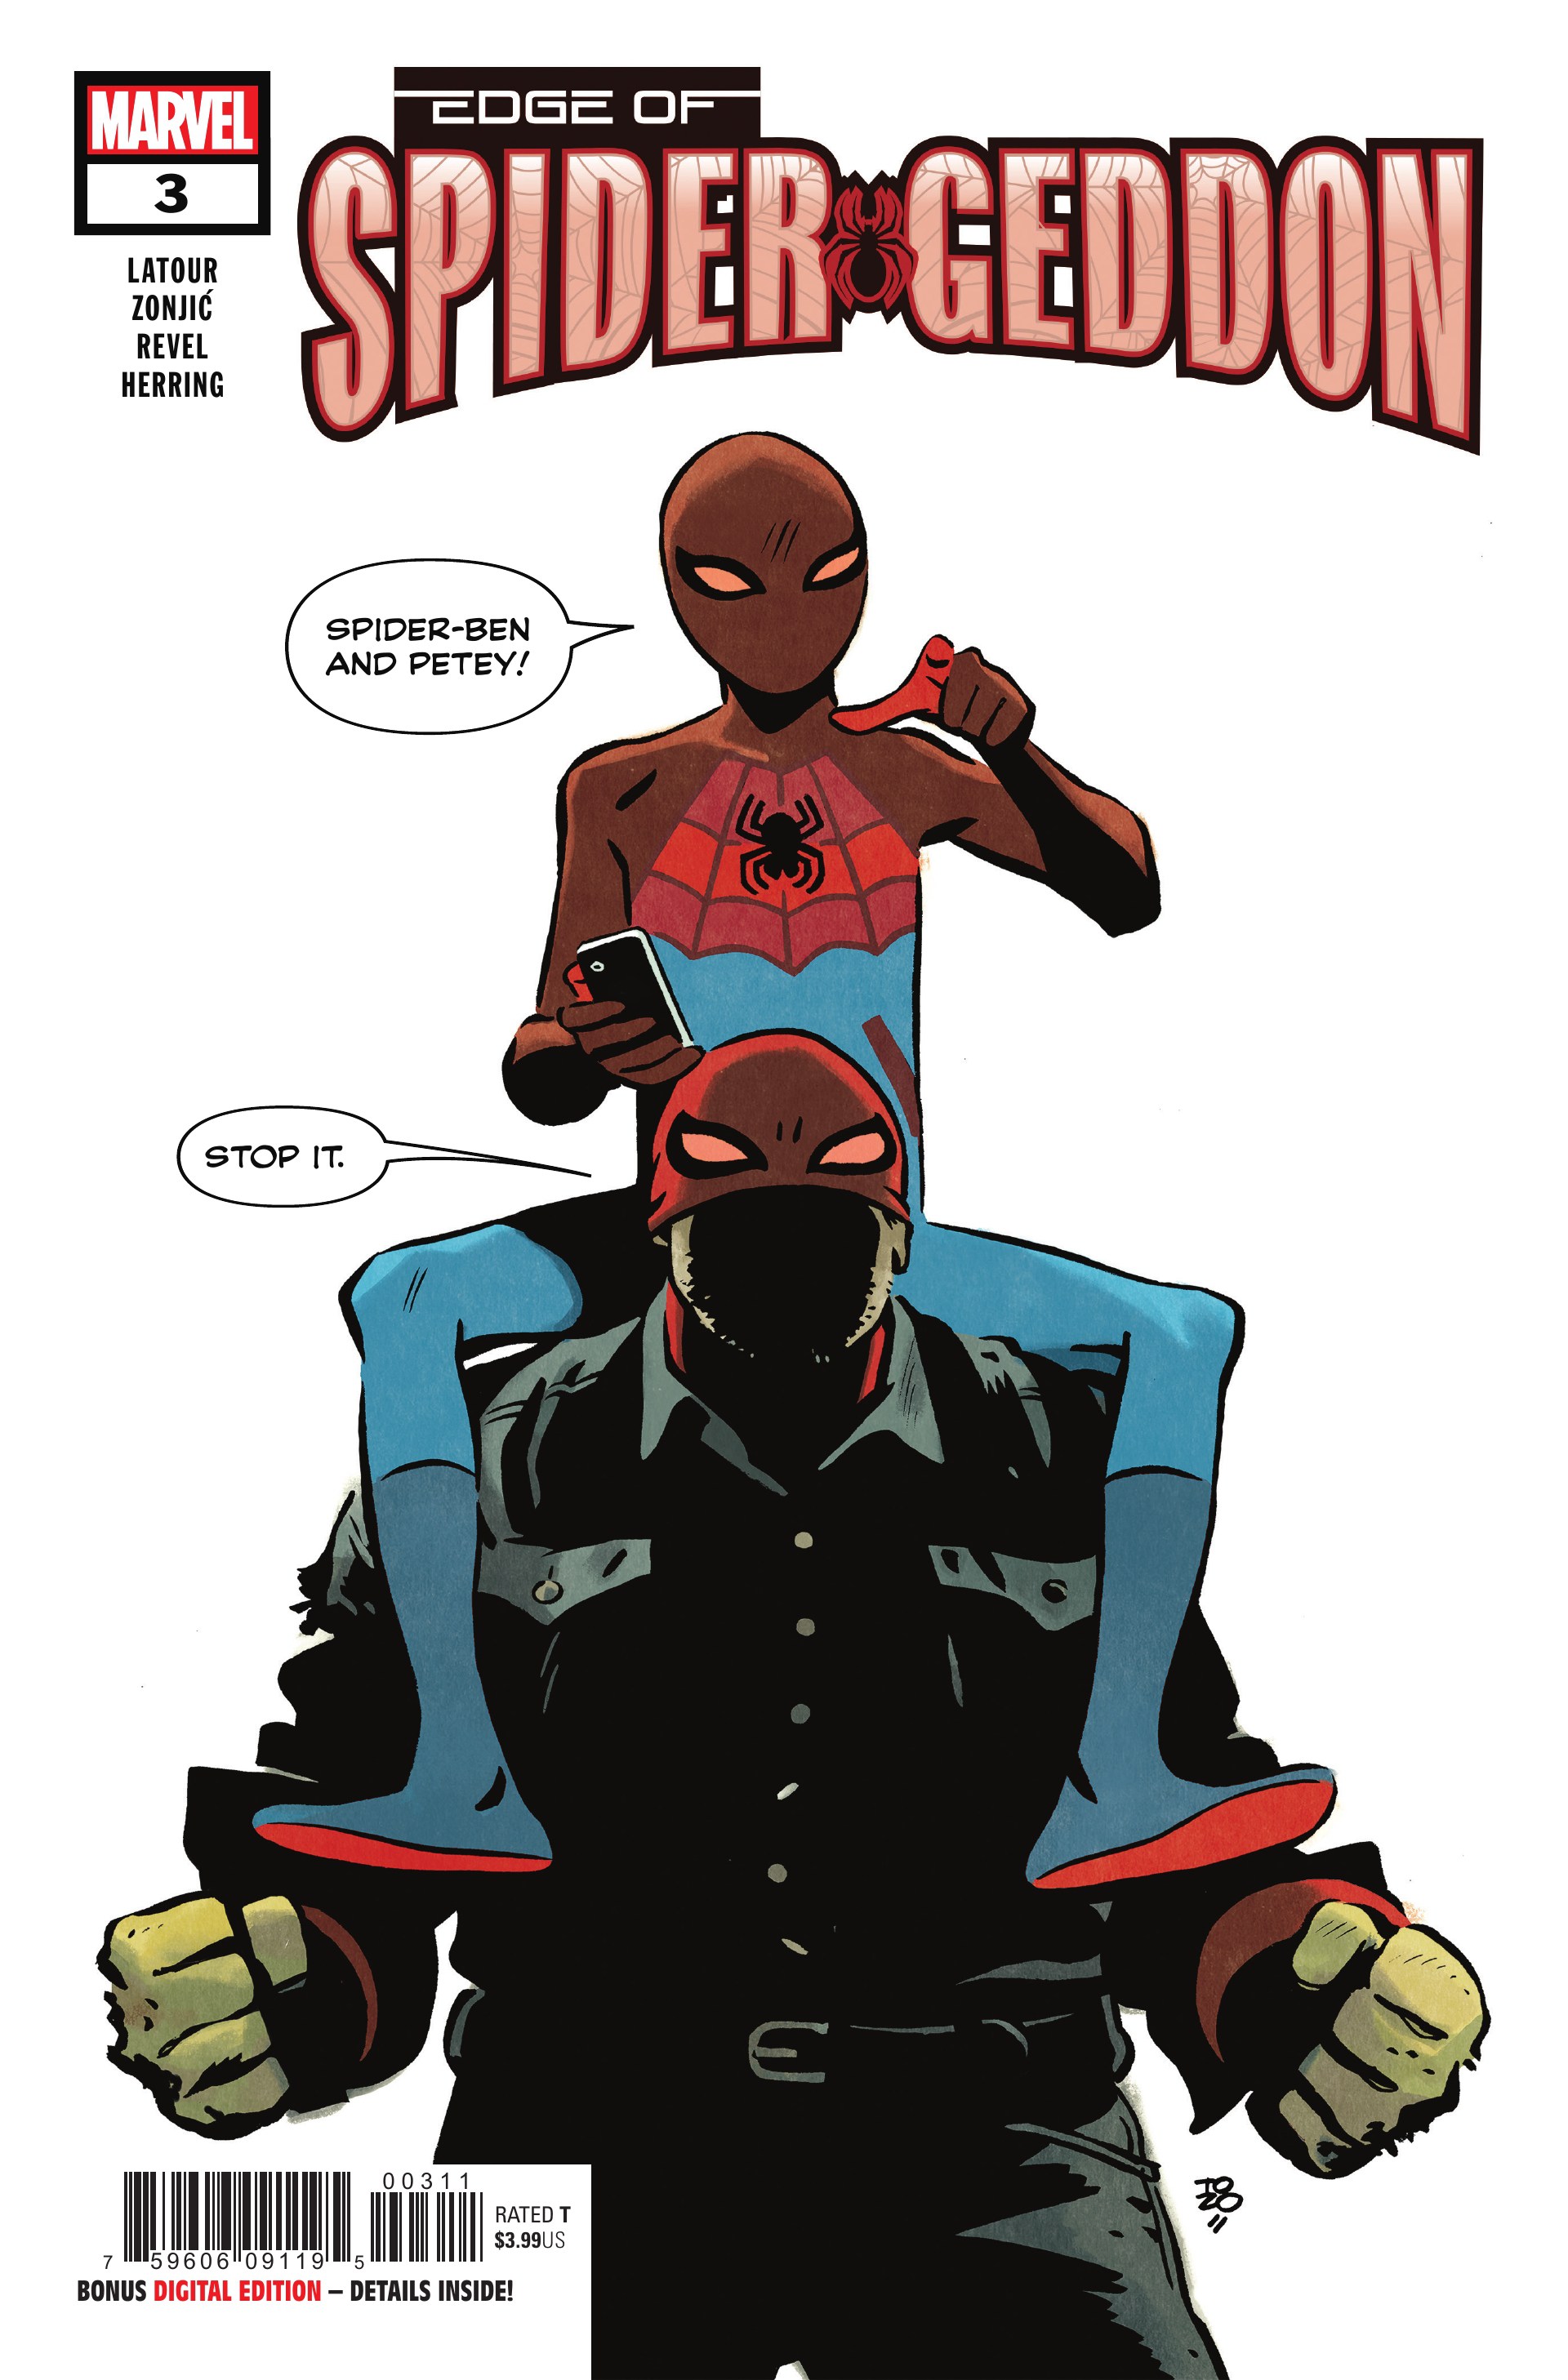 Edge of Spider-Geddon Vol 1 3 | Marvel Database | Fandom